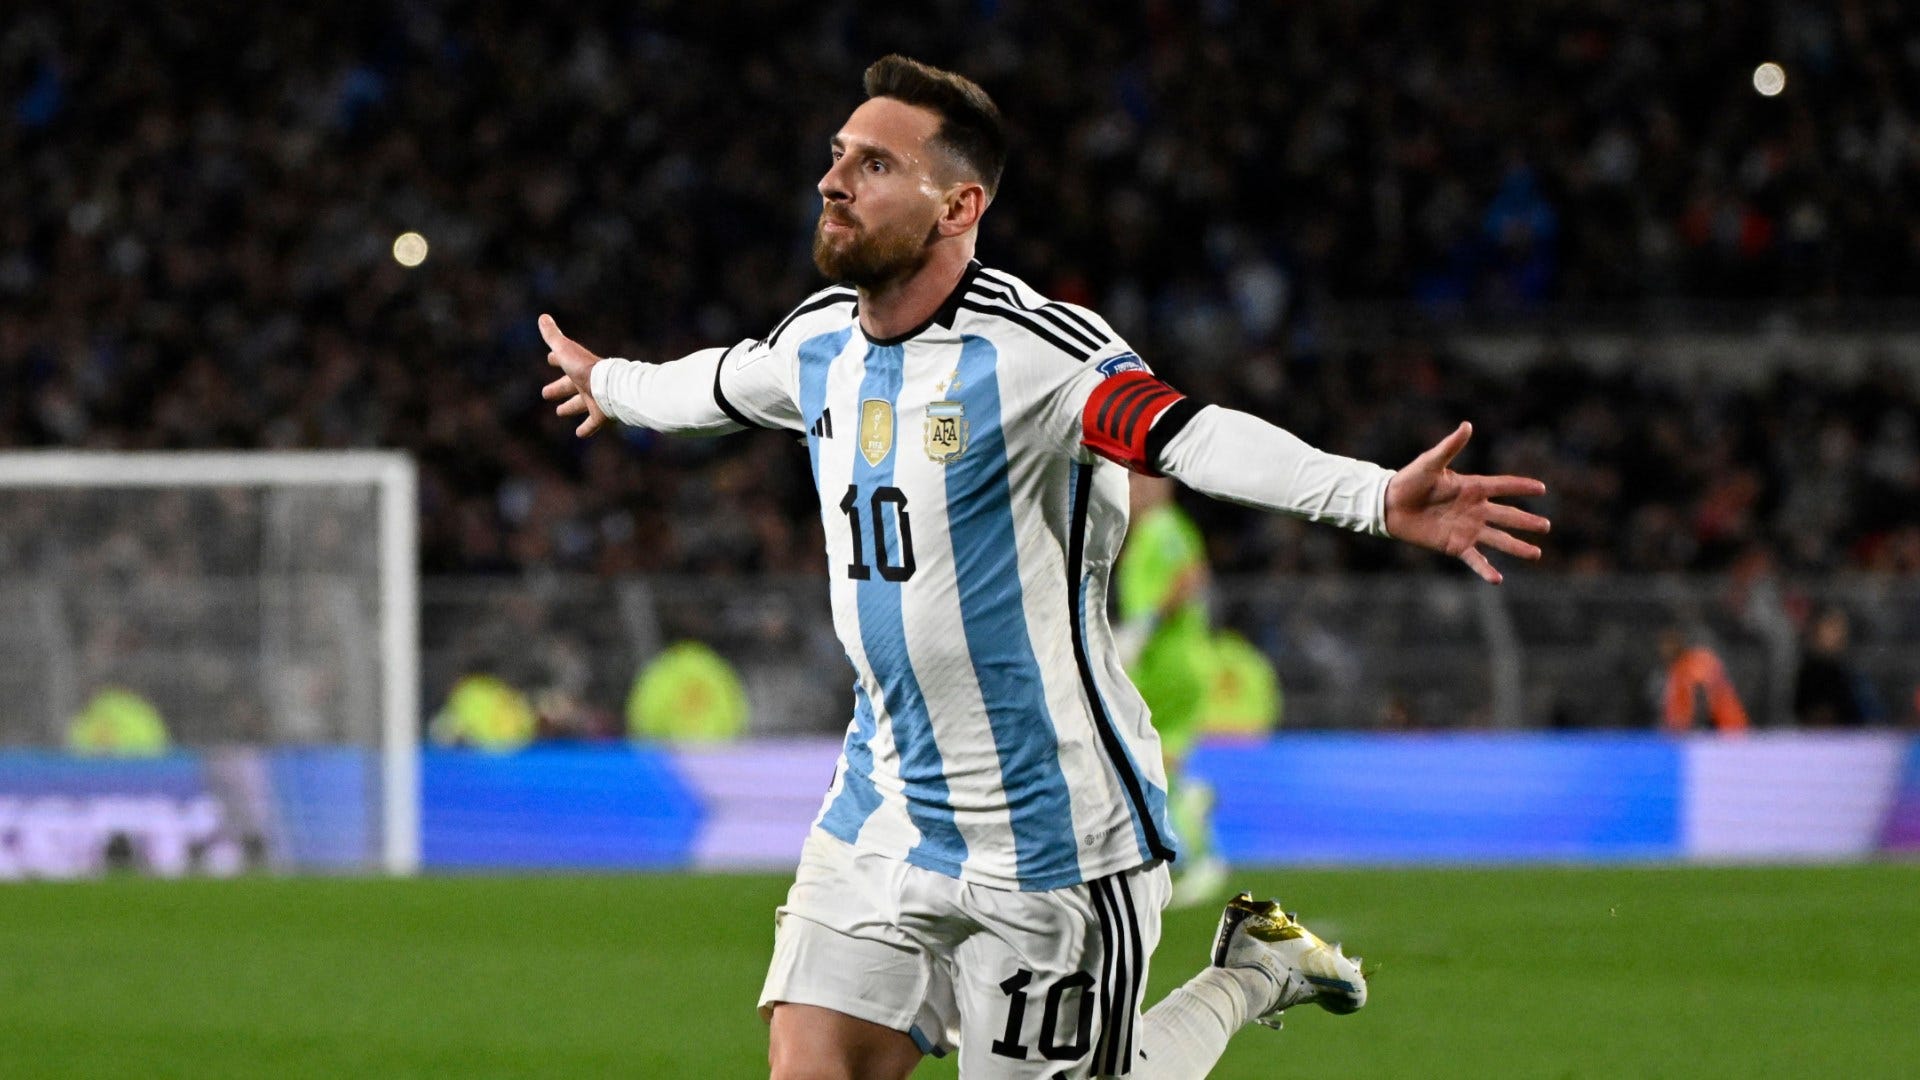 MIRA: Lionel Messi anota un increíble tiro libre para Argentina en el partido de clasificación para el Mundial contra Ecuador